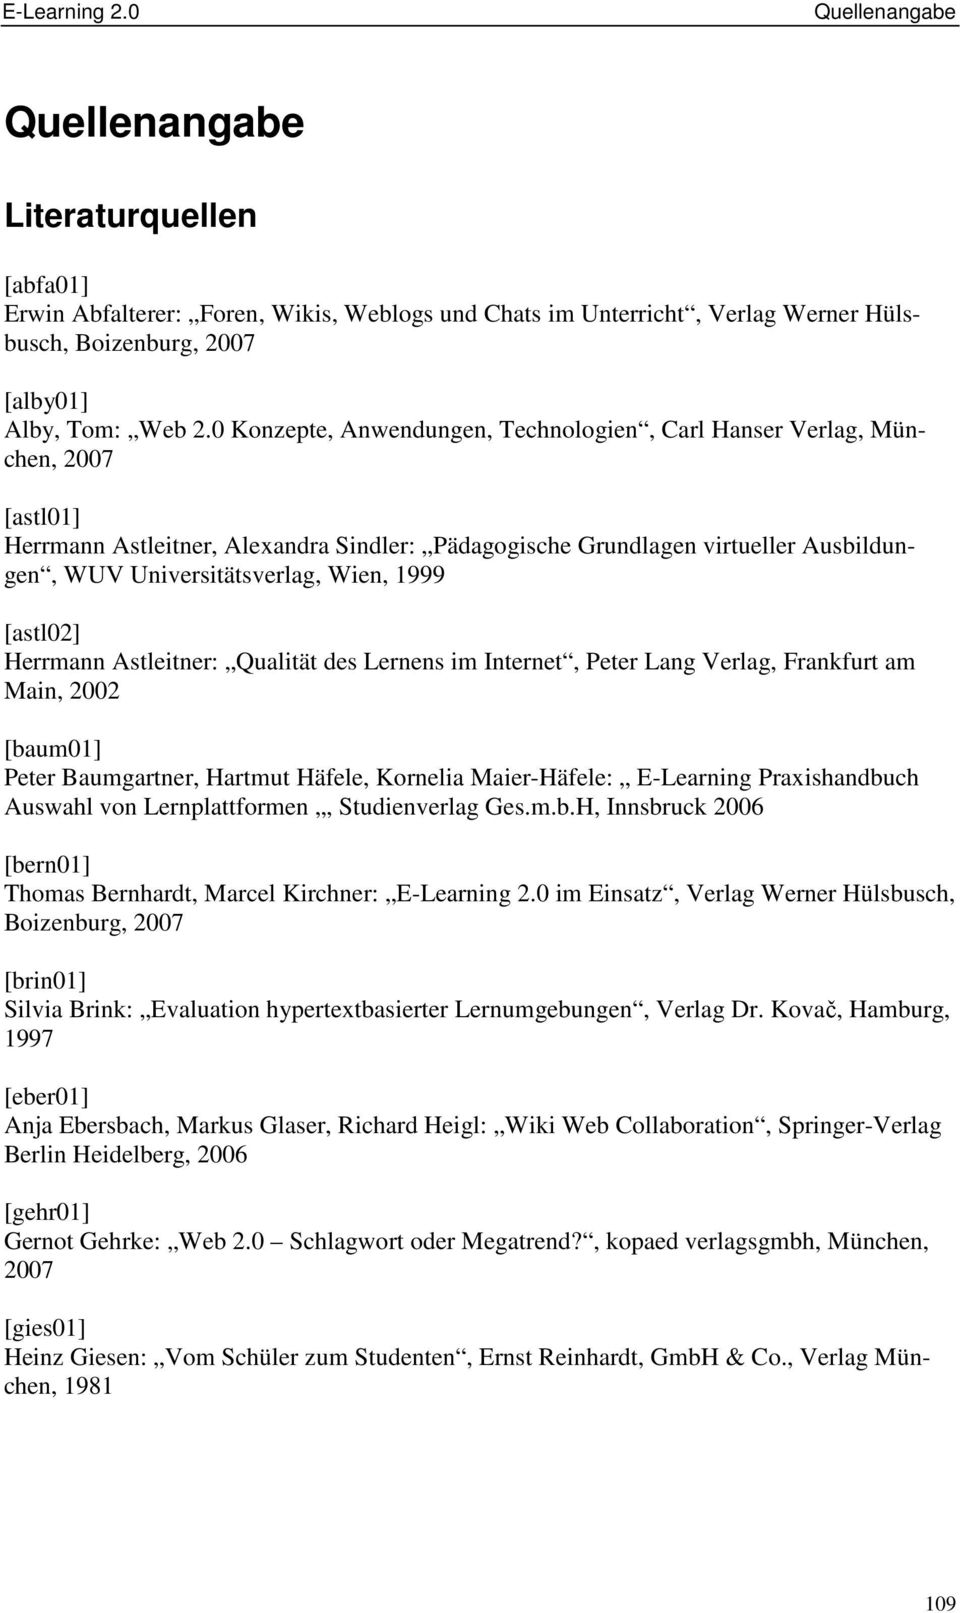 Wien, 1999 [astl02] Herrmann Astleitner: Qualität des Lernens im Internet, Peter Lang Verlag, Frankfurt am Main, 2002 [baum01] Peter Baumgartner, Hartmut Häfele, Kornelia Maier-Häfele: E-Learning